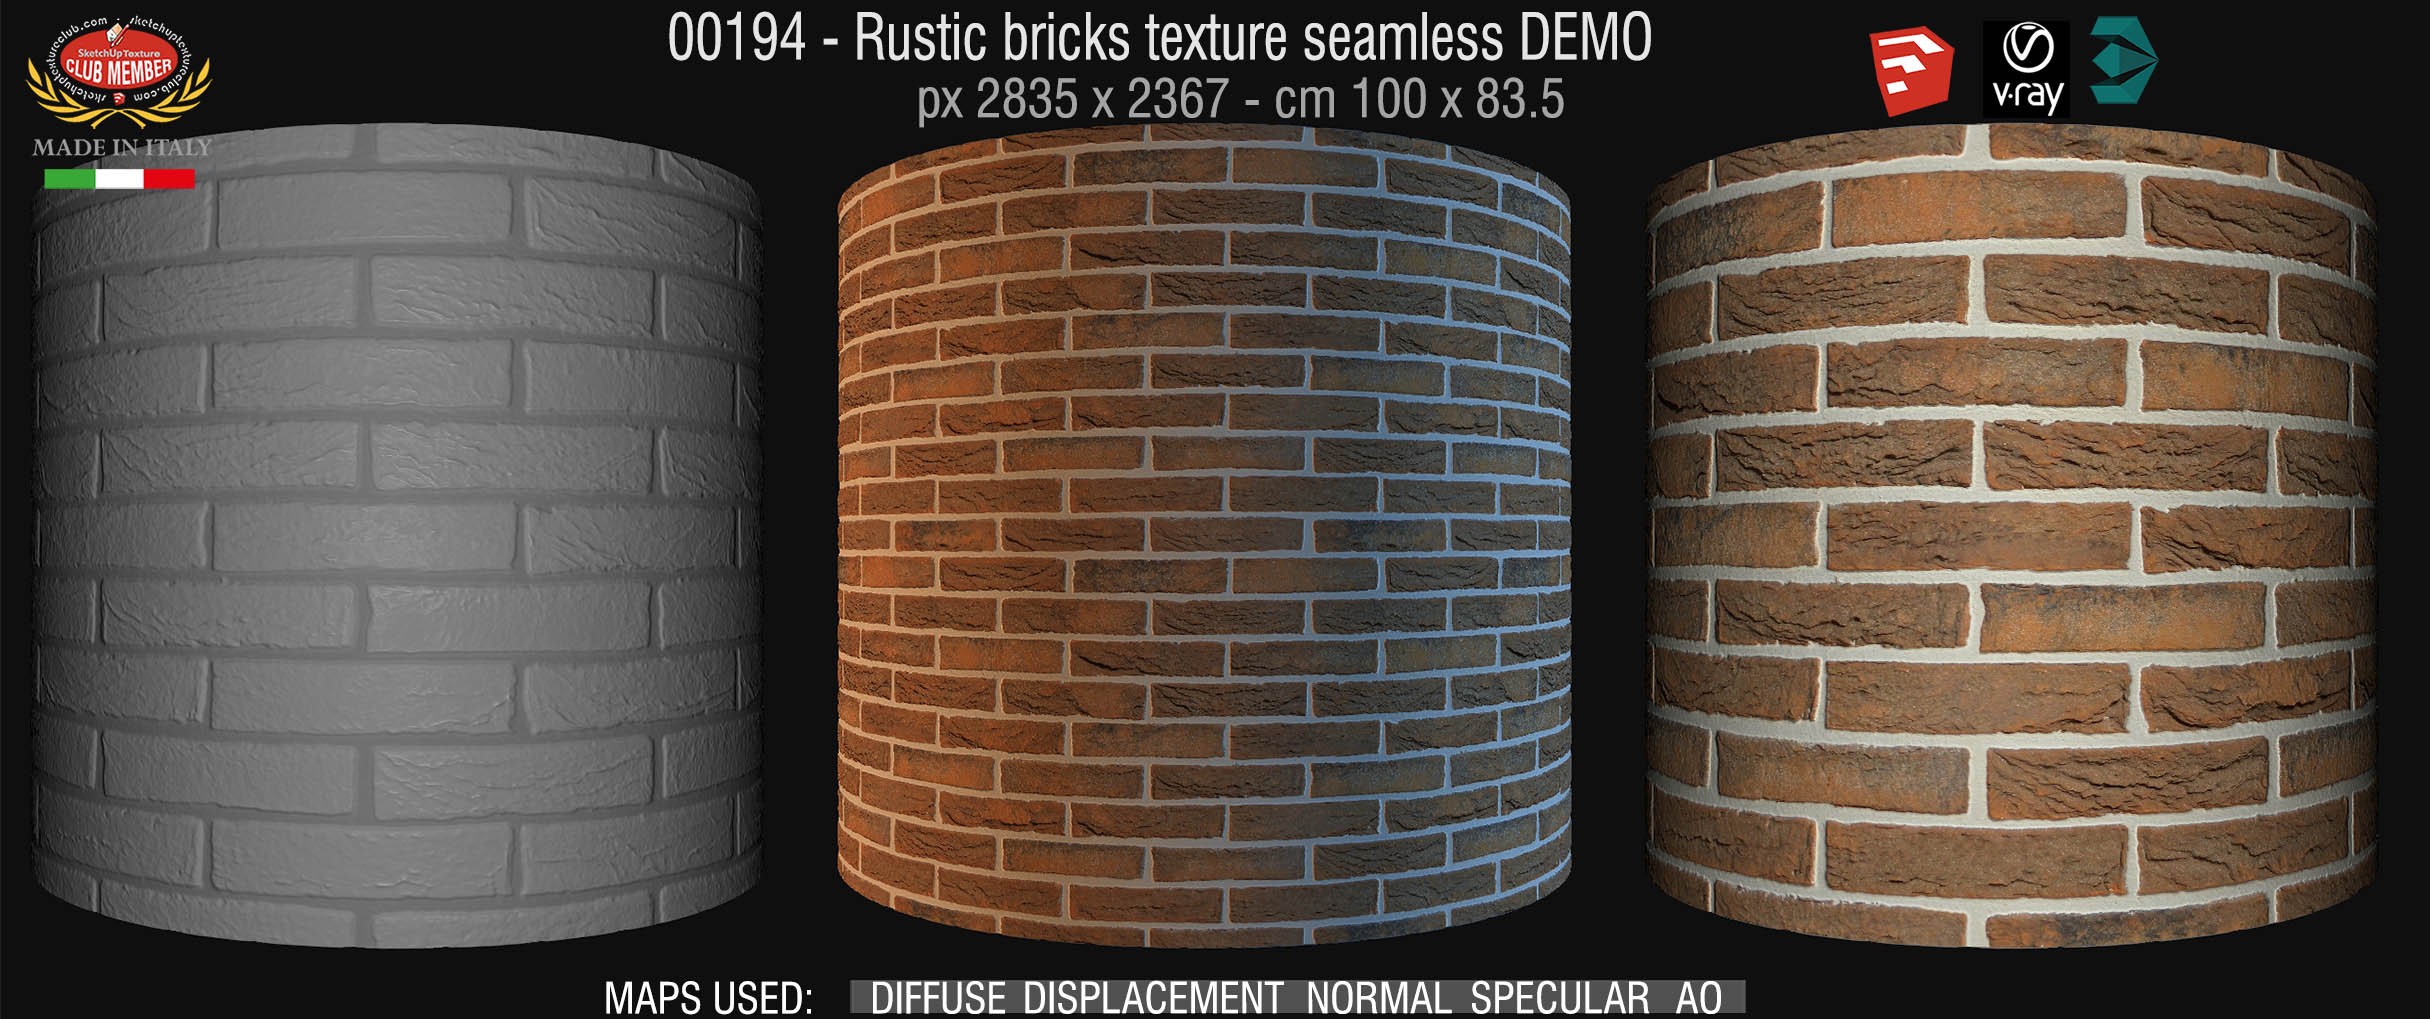 00194 Rustic bricks texture seamless + maps DEMO